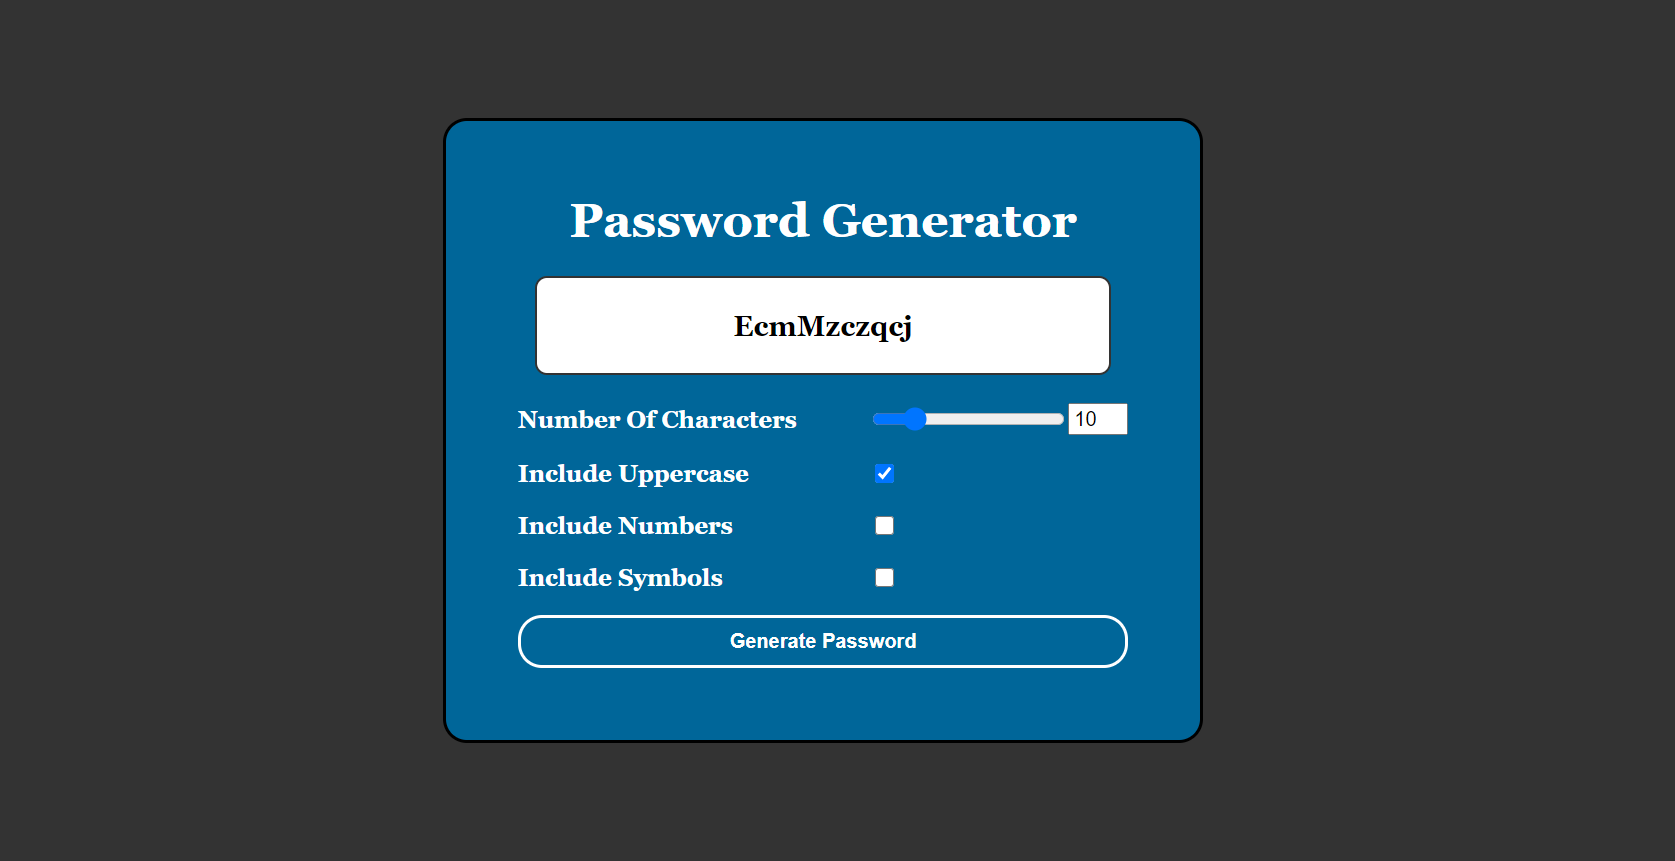 random email generator with password